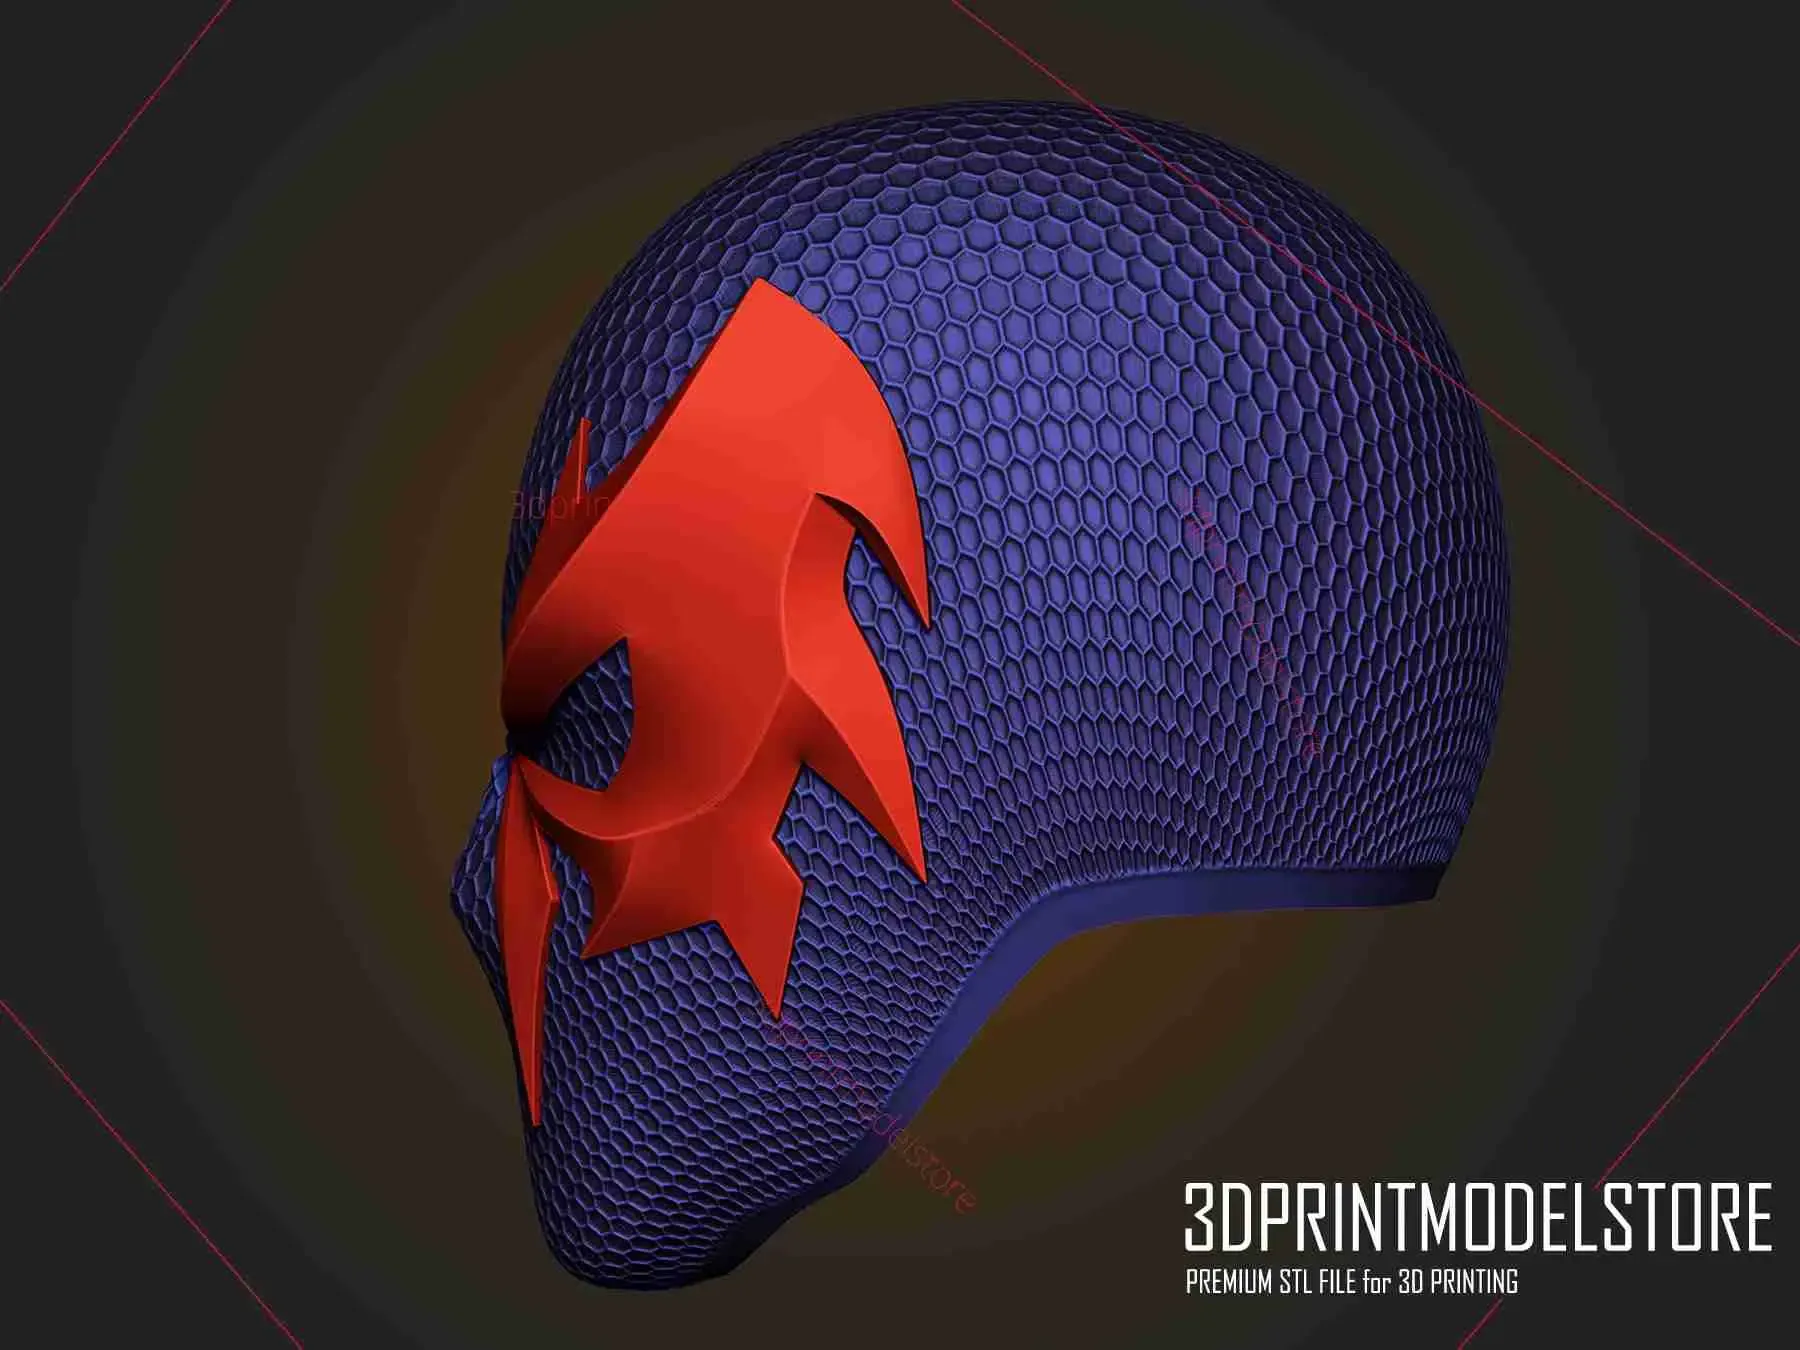 Spiderman 2099 Mask - Marvel Cosplay Halloween Costume